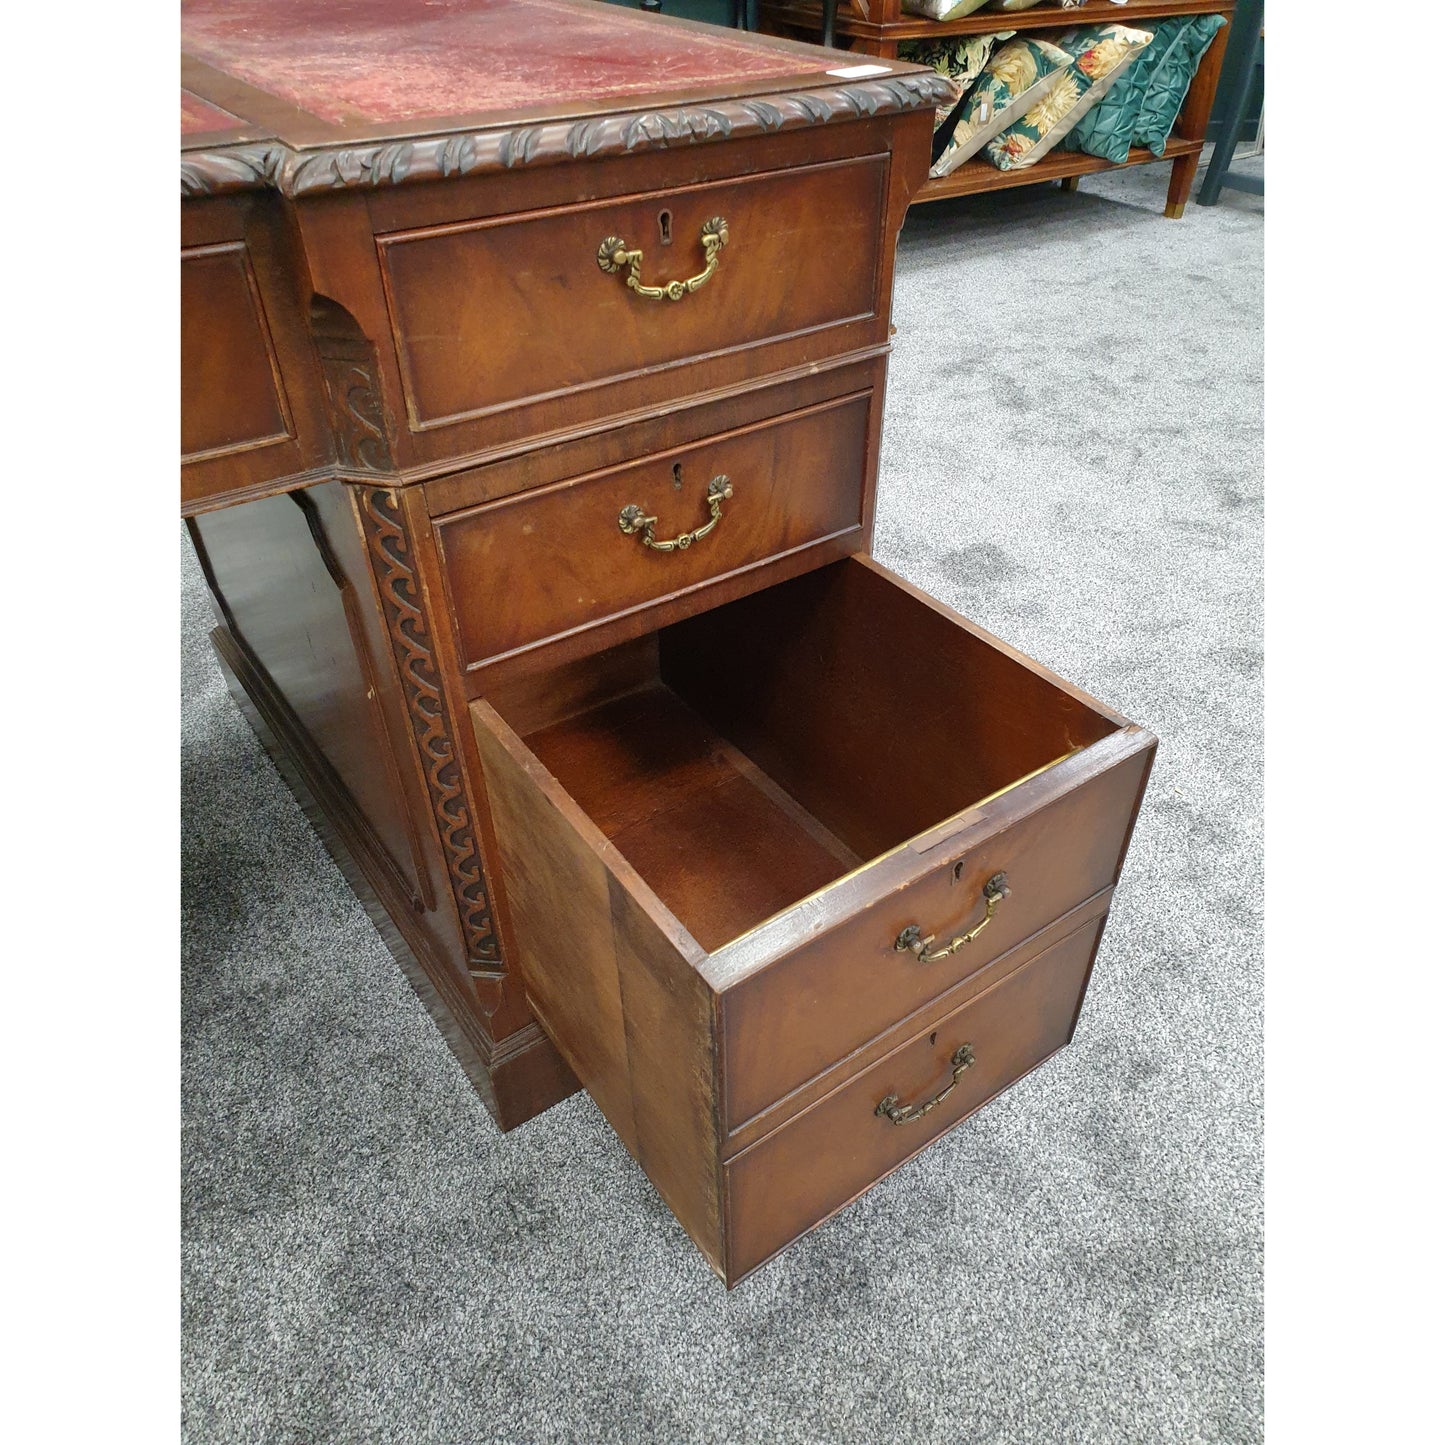 Antique Mahogany Leather Top Desk